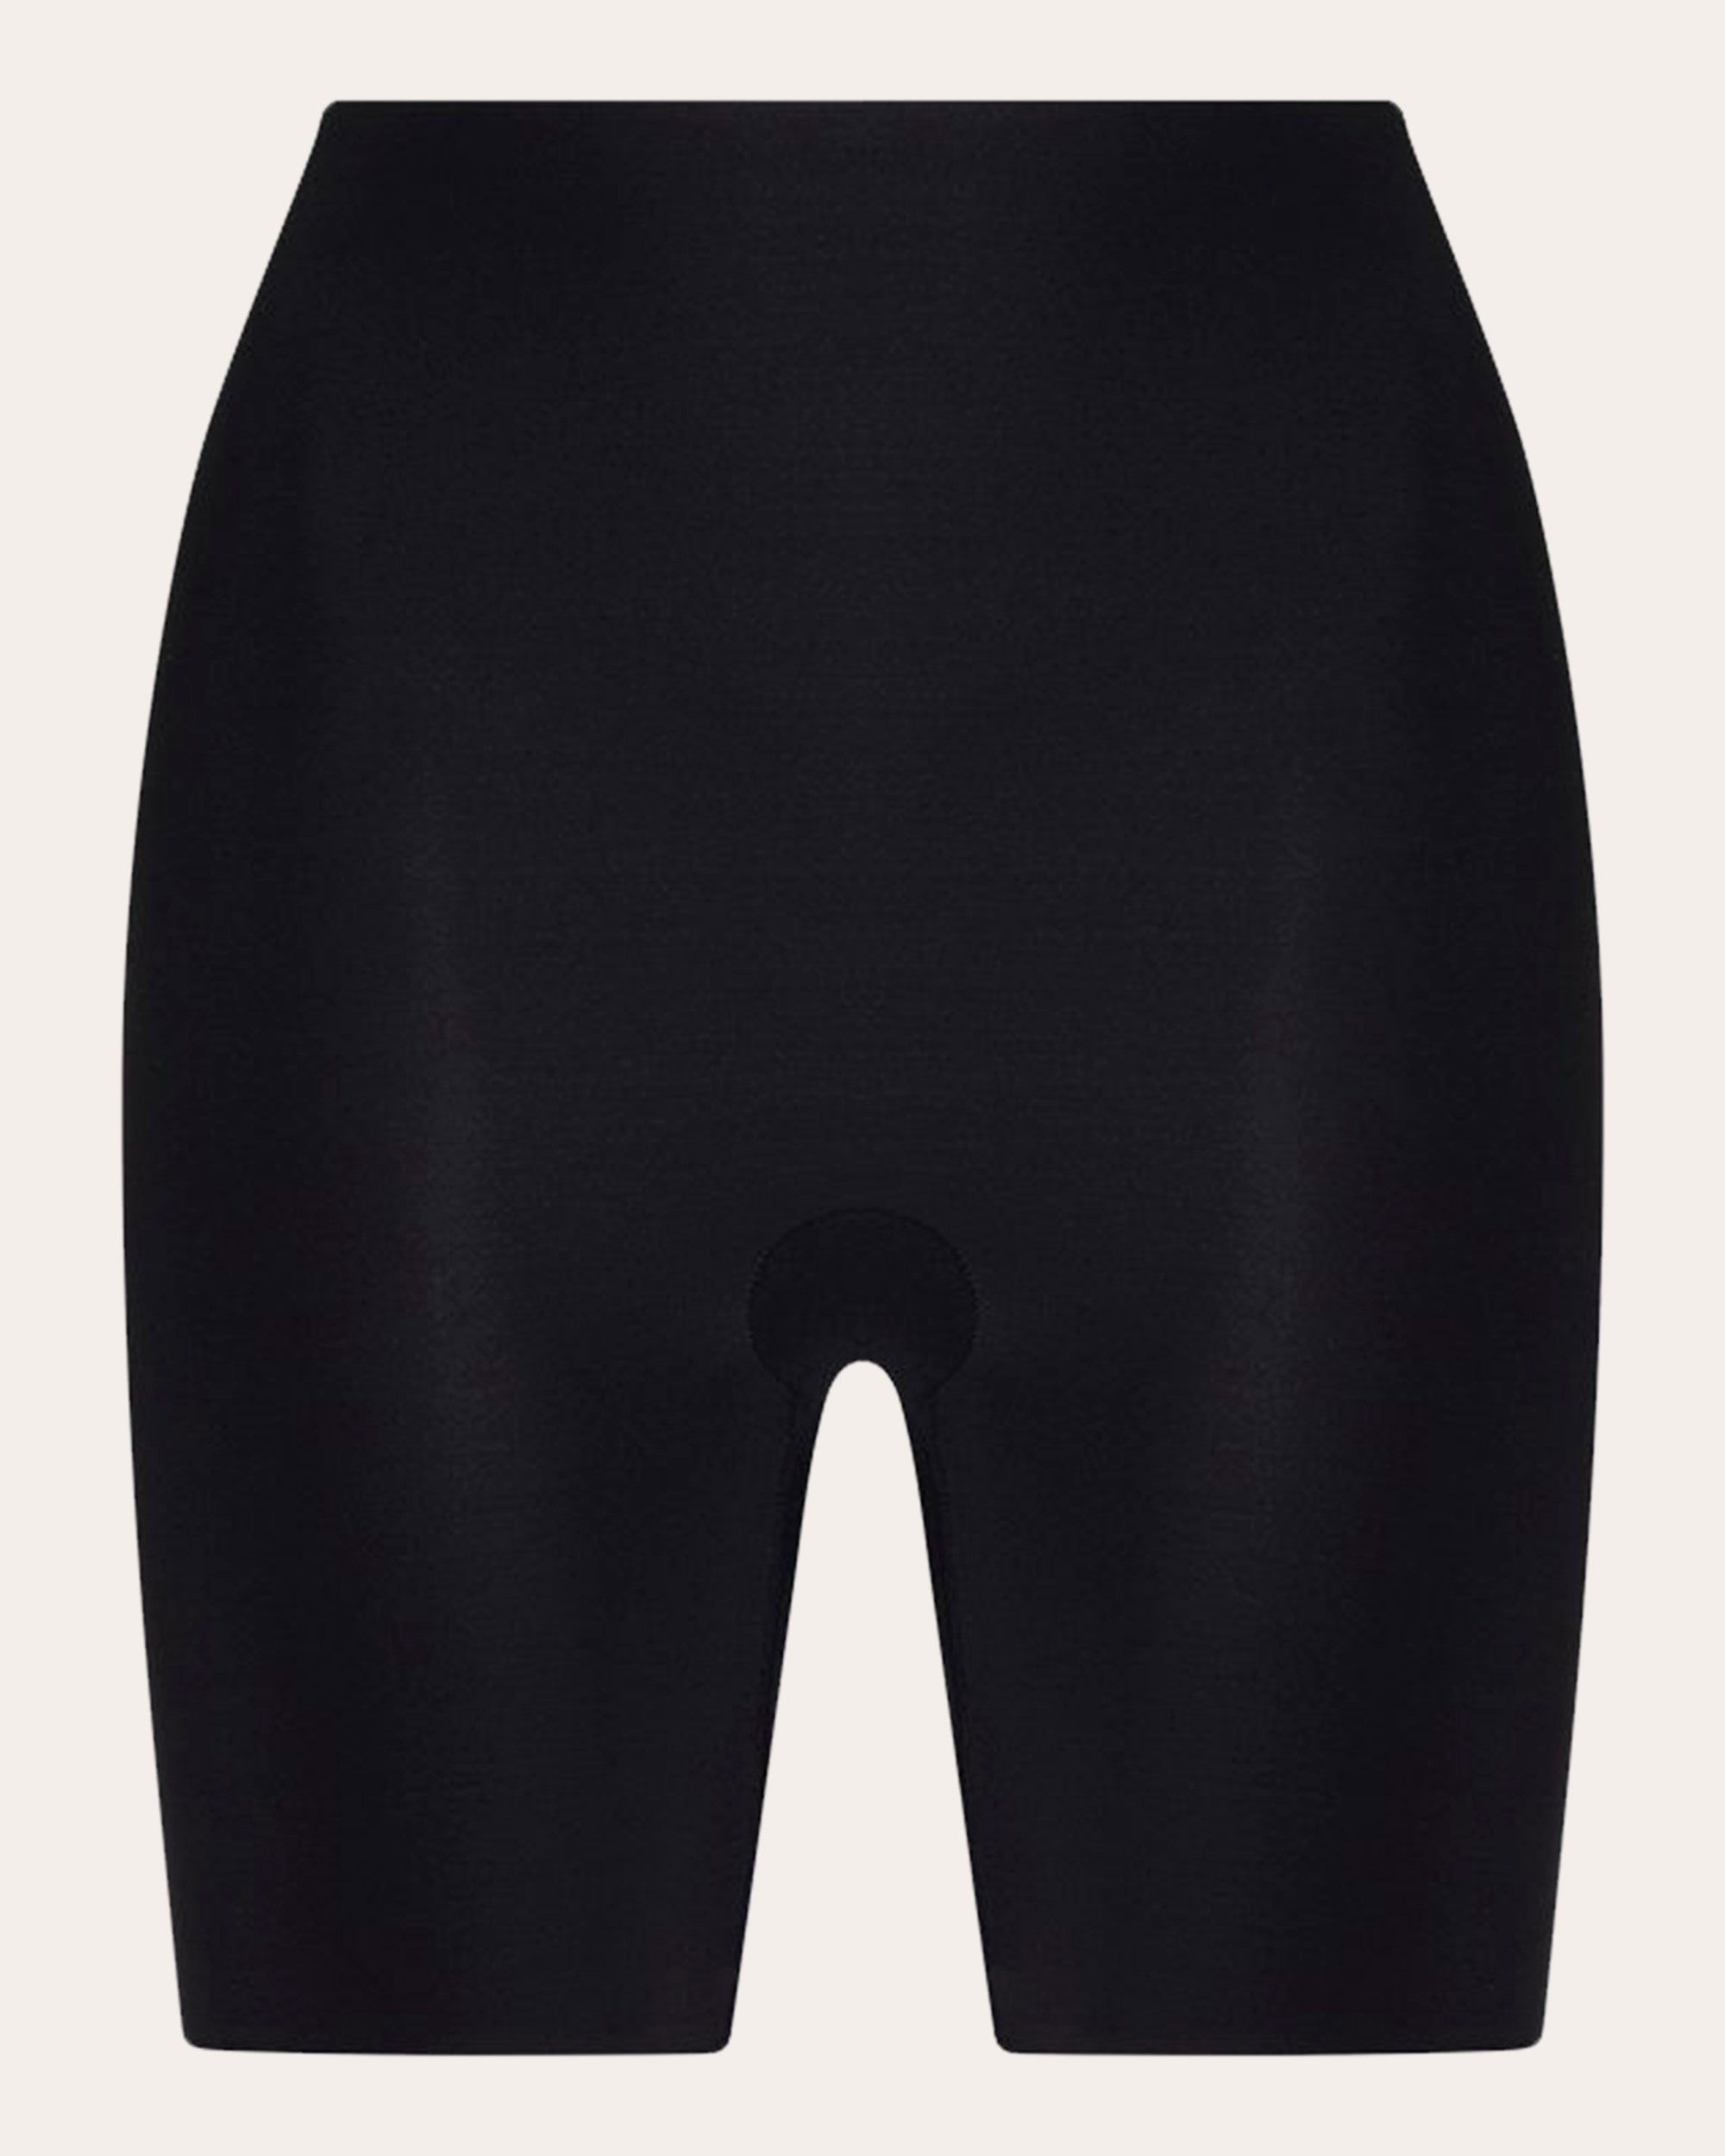 commando Women's Classic Control Shorts, Black, XS at